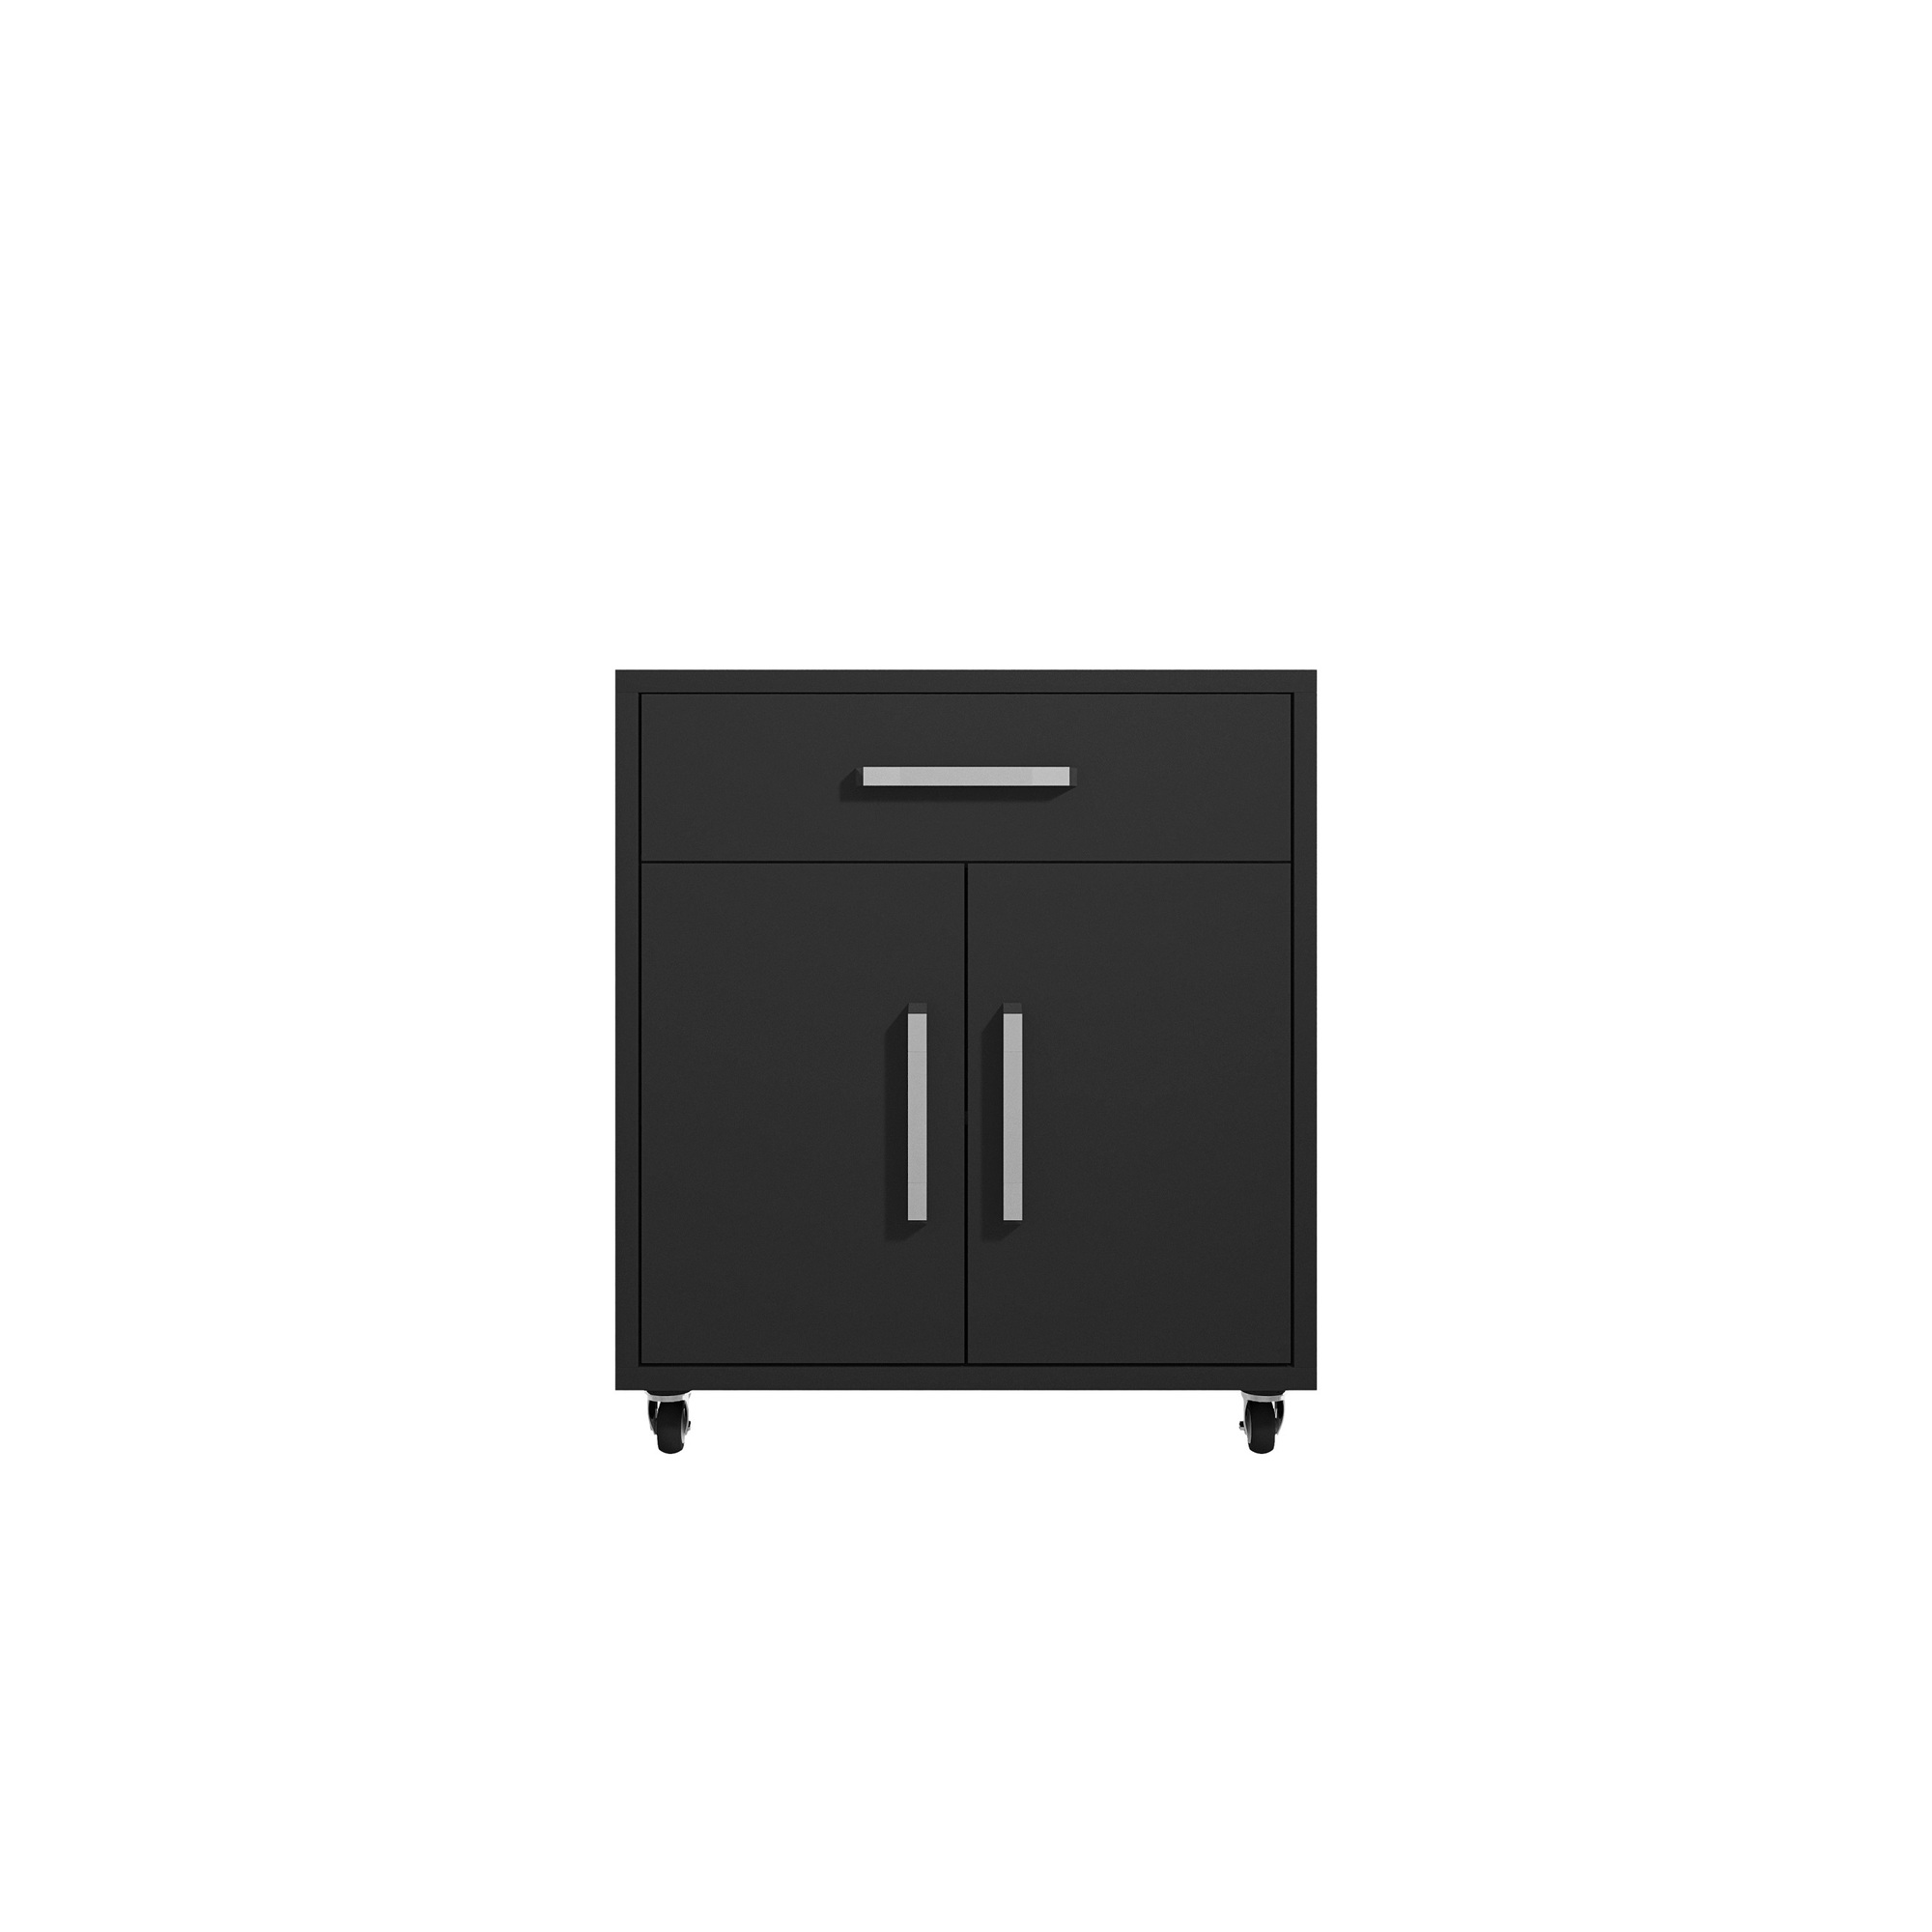 Manhattan Comfort, Eiffel 28.35 Mobile Garage Storage Cabinet, Black, Height 34.41 in, Width 28.35 in, Color Black, Model 252BMC